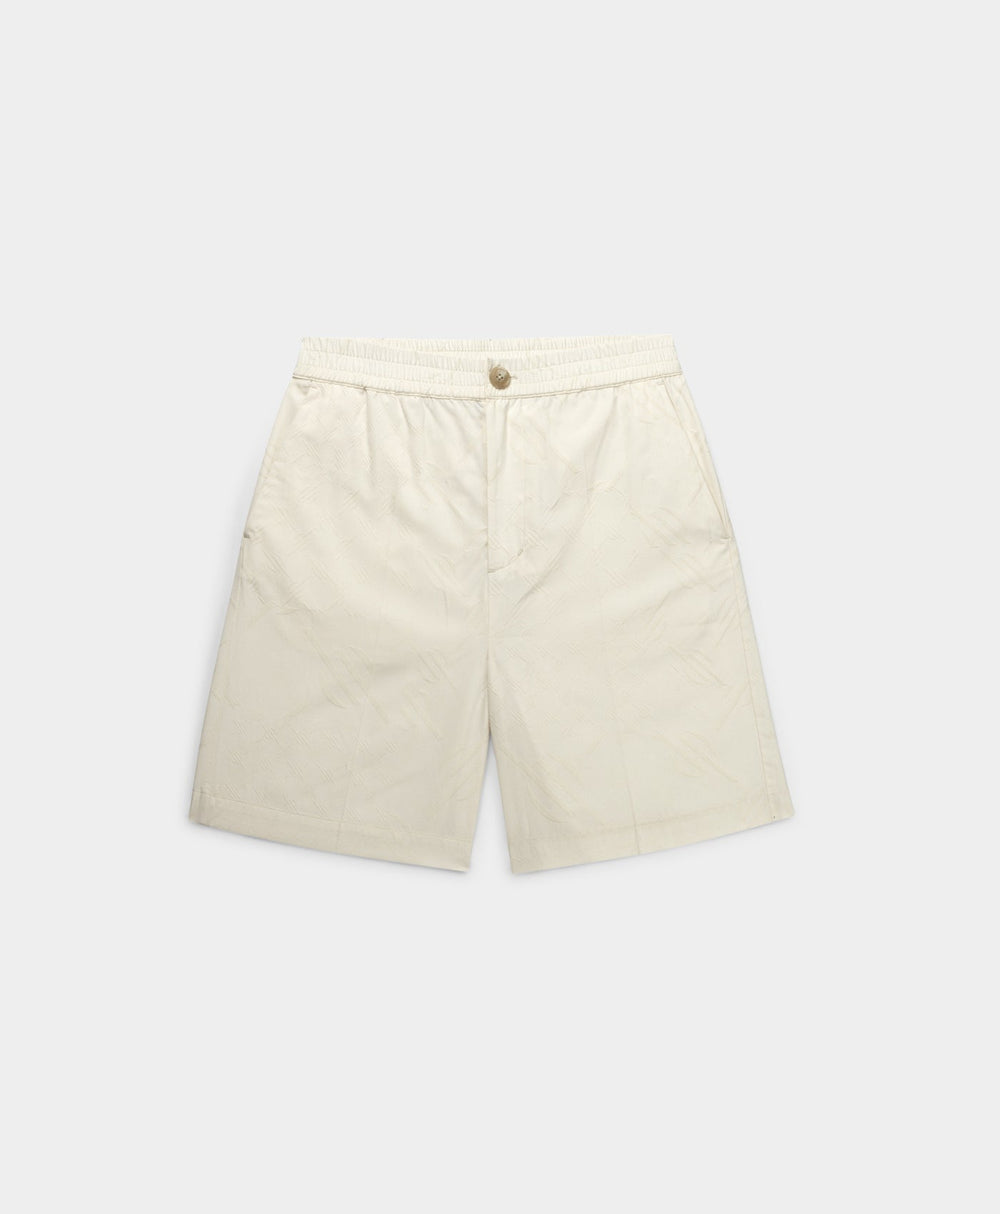 DP - Egret White Piam Shorts - Packshot - Front